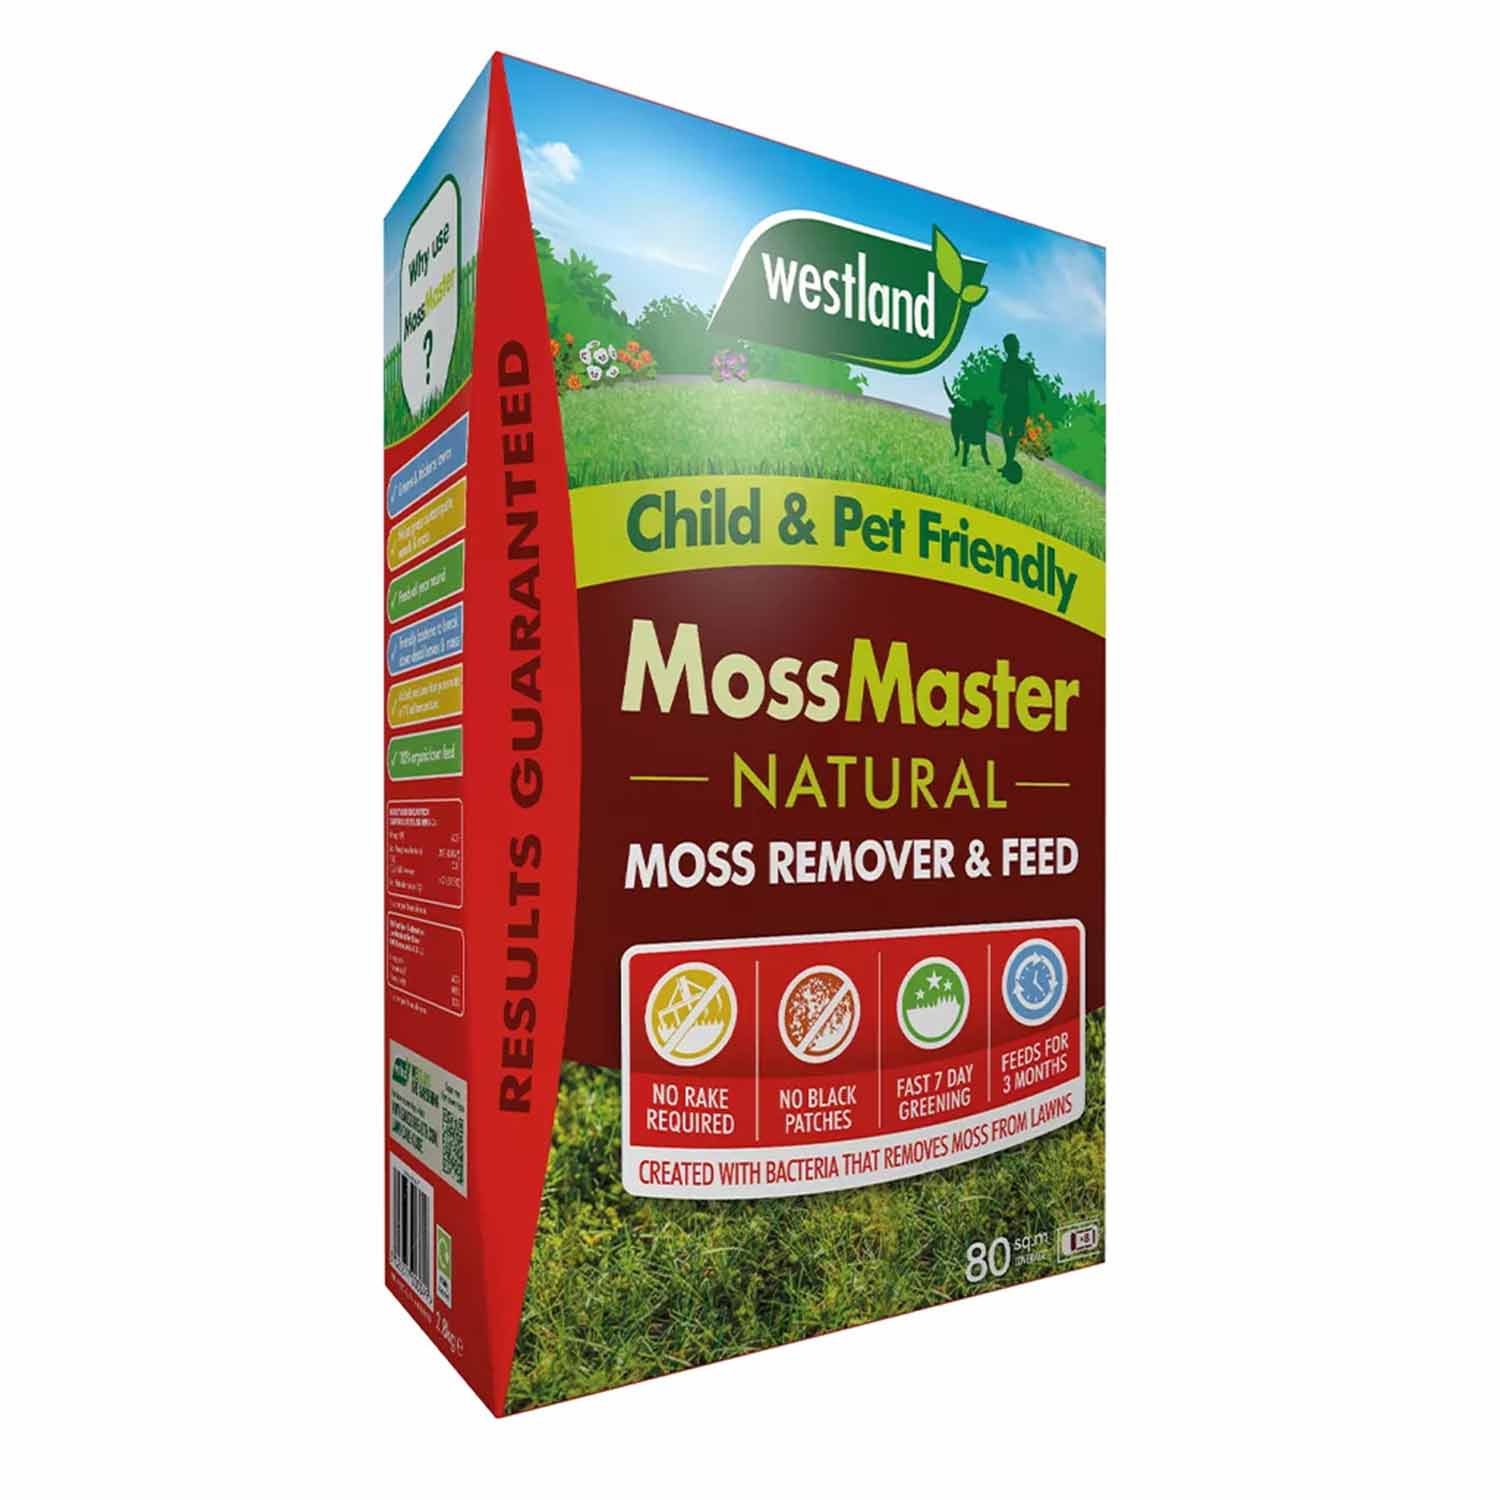 Moss Master Box 80sqm